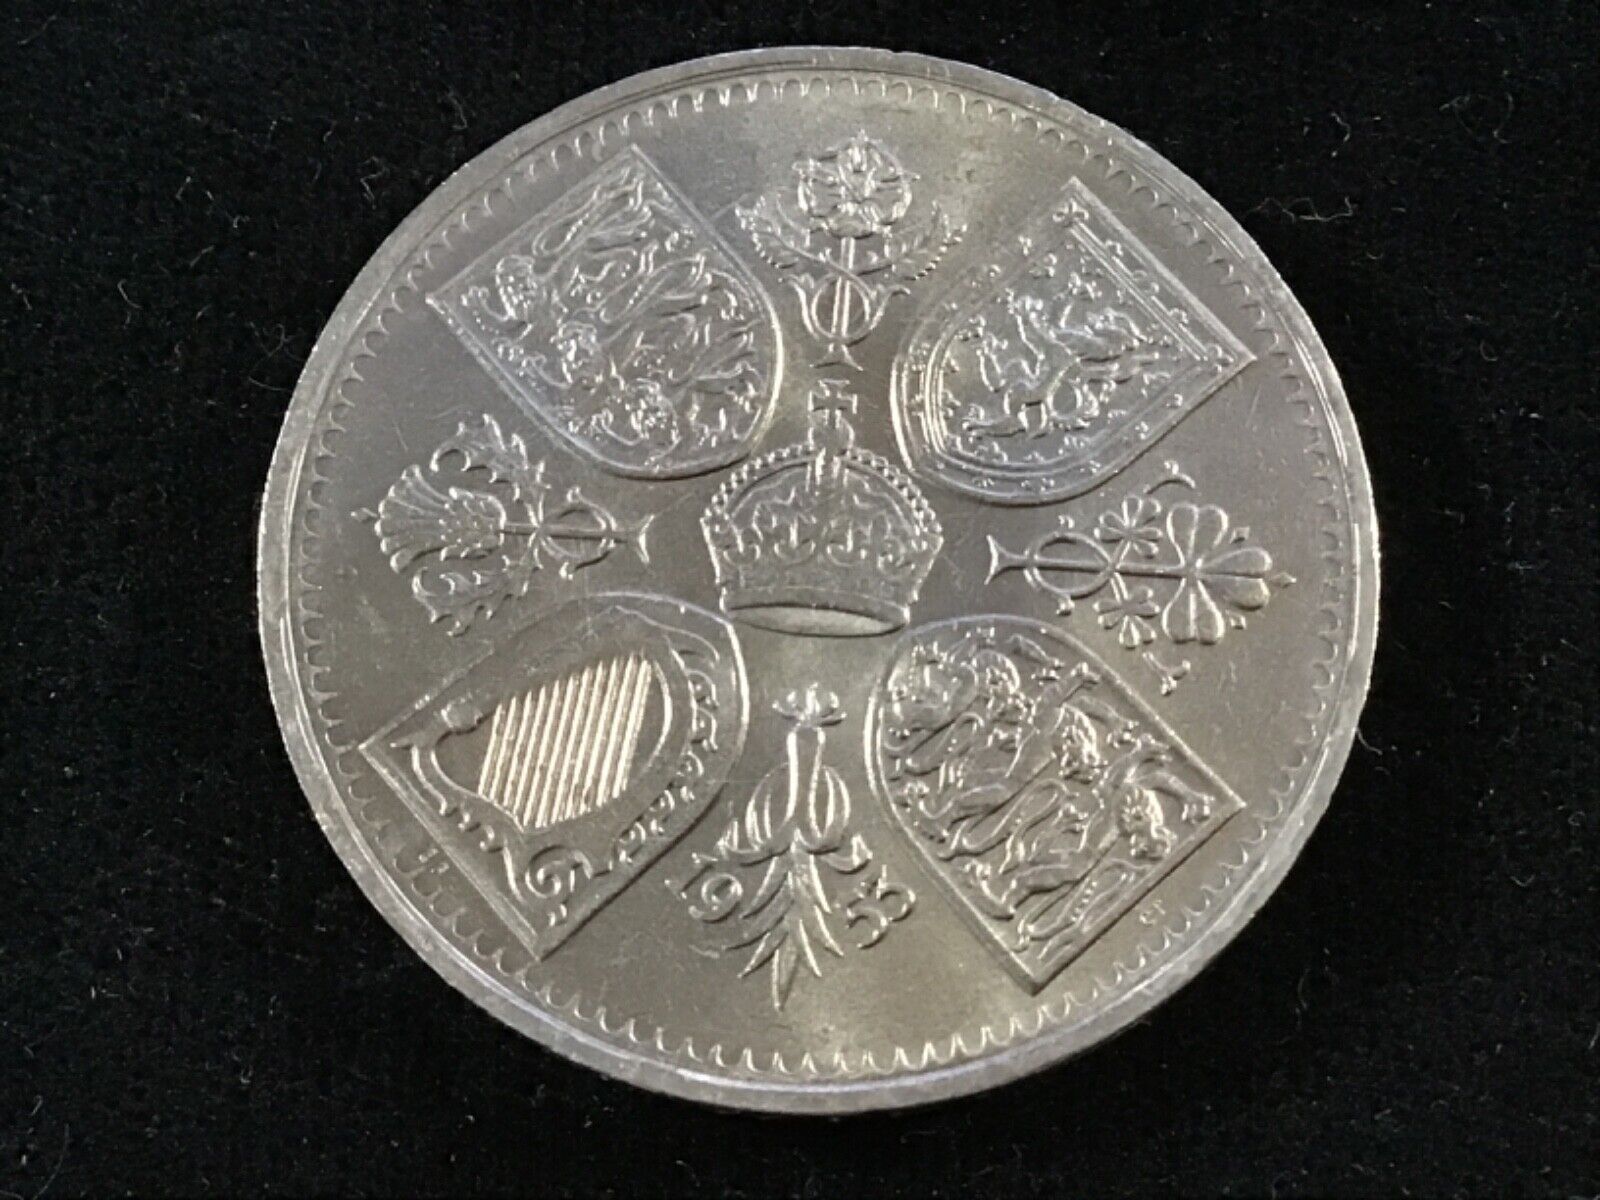 1953 British 5 Shilling Queen Elizabeth Coronation Commemorative Crown 1/4 Pound